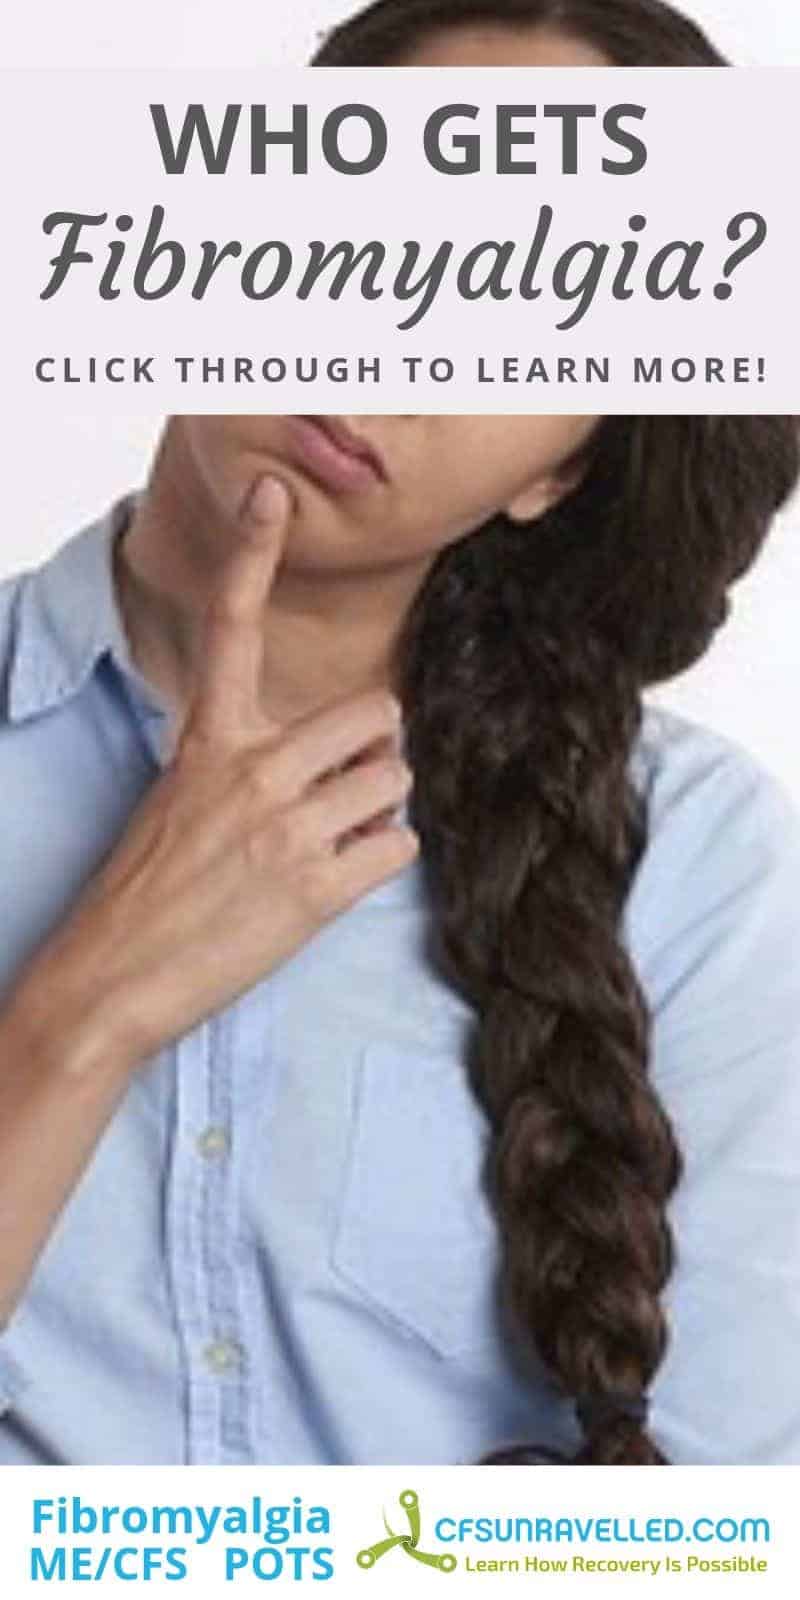 woman touching chin asking who gets fibromyalgia